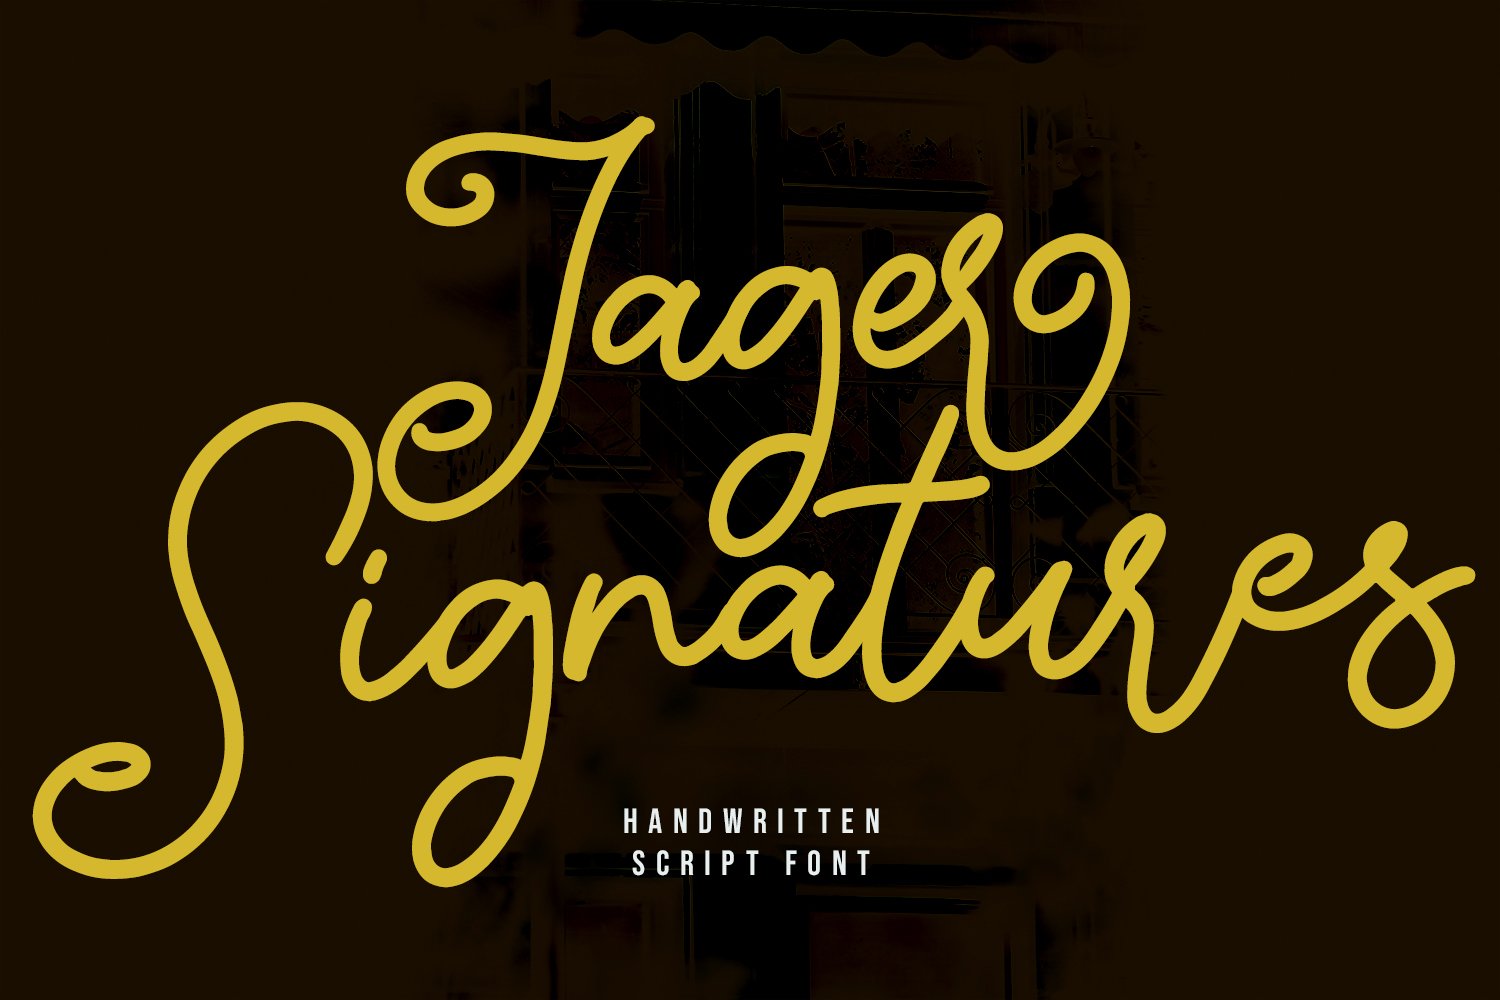 Jager Signature Handwritten Script cover image.